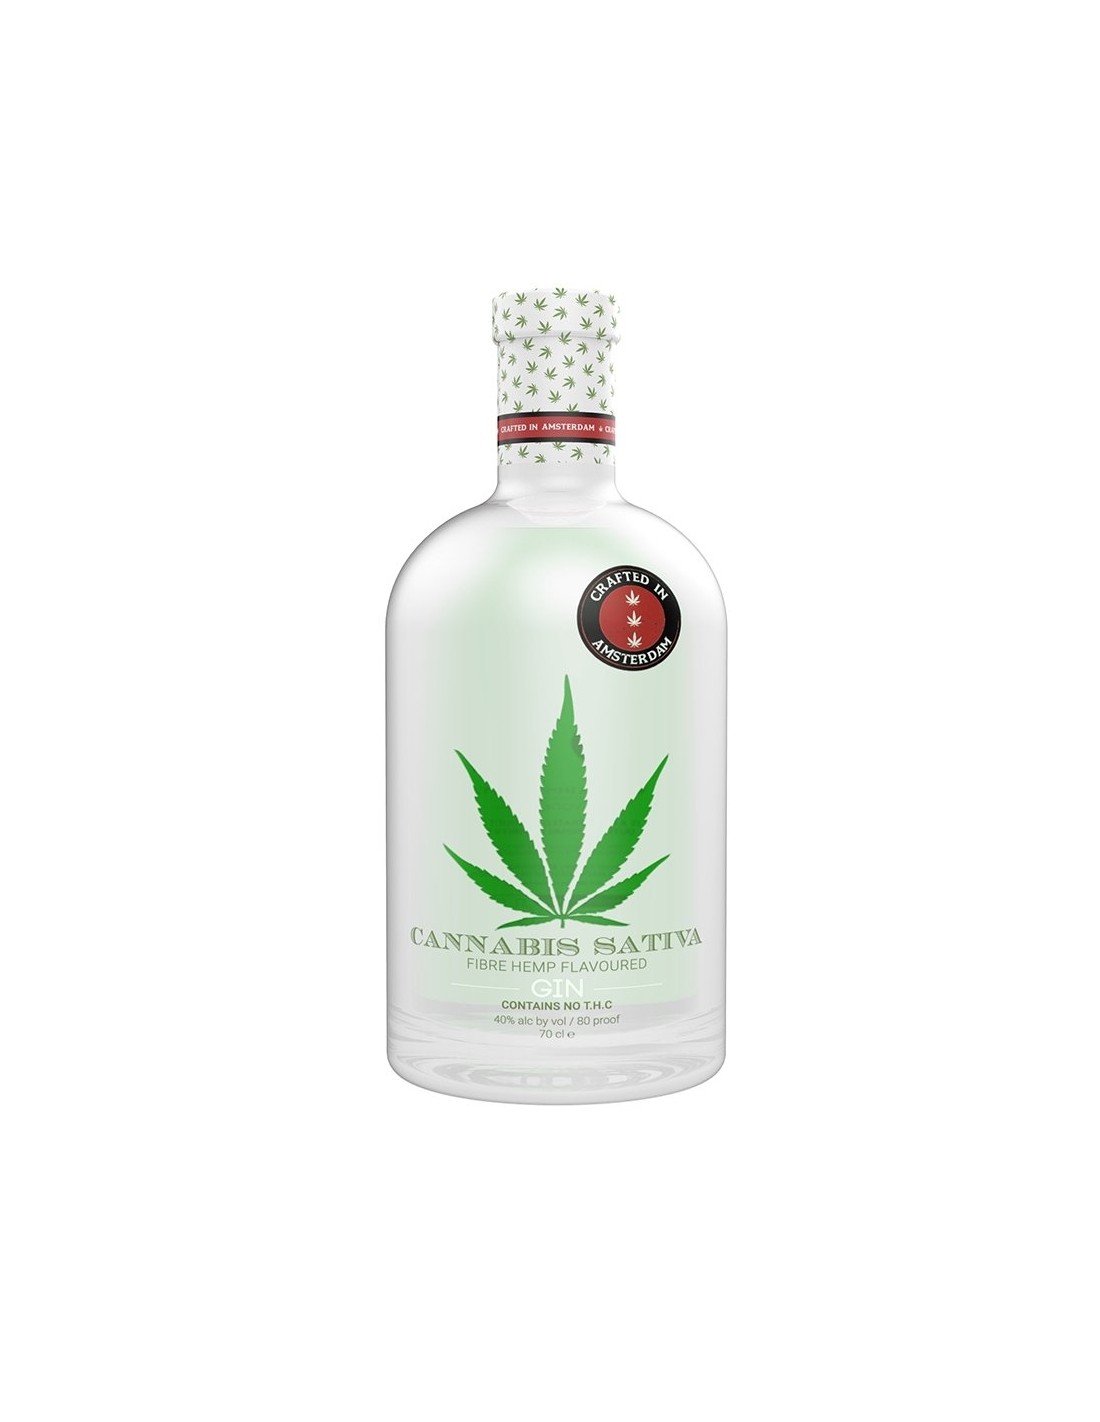 Gin Cannabis Sativa, 40% alc., 0.7L, Olanda alcooldiscount.ro